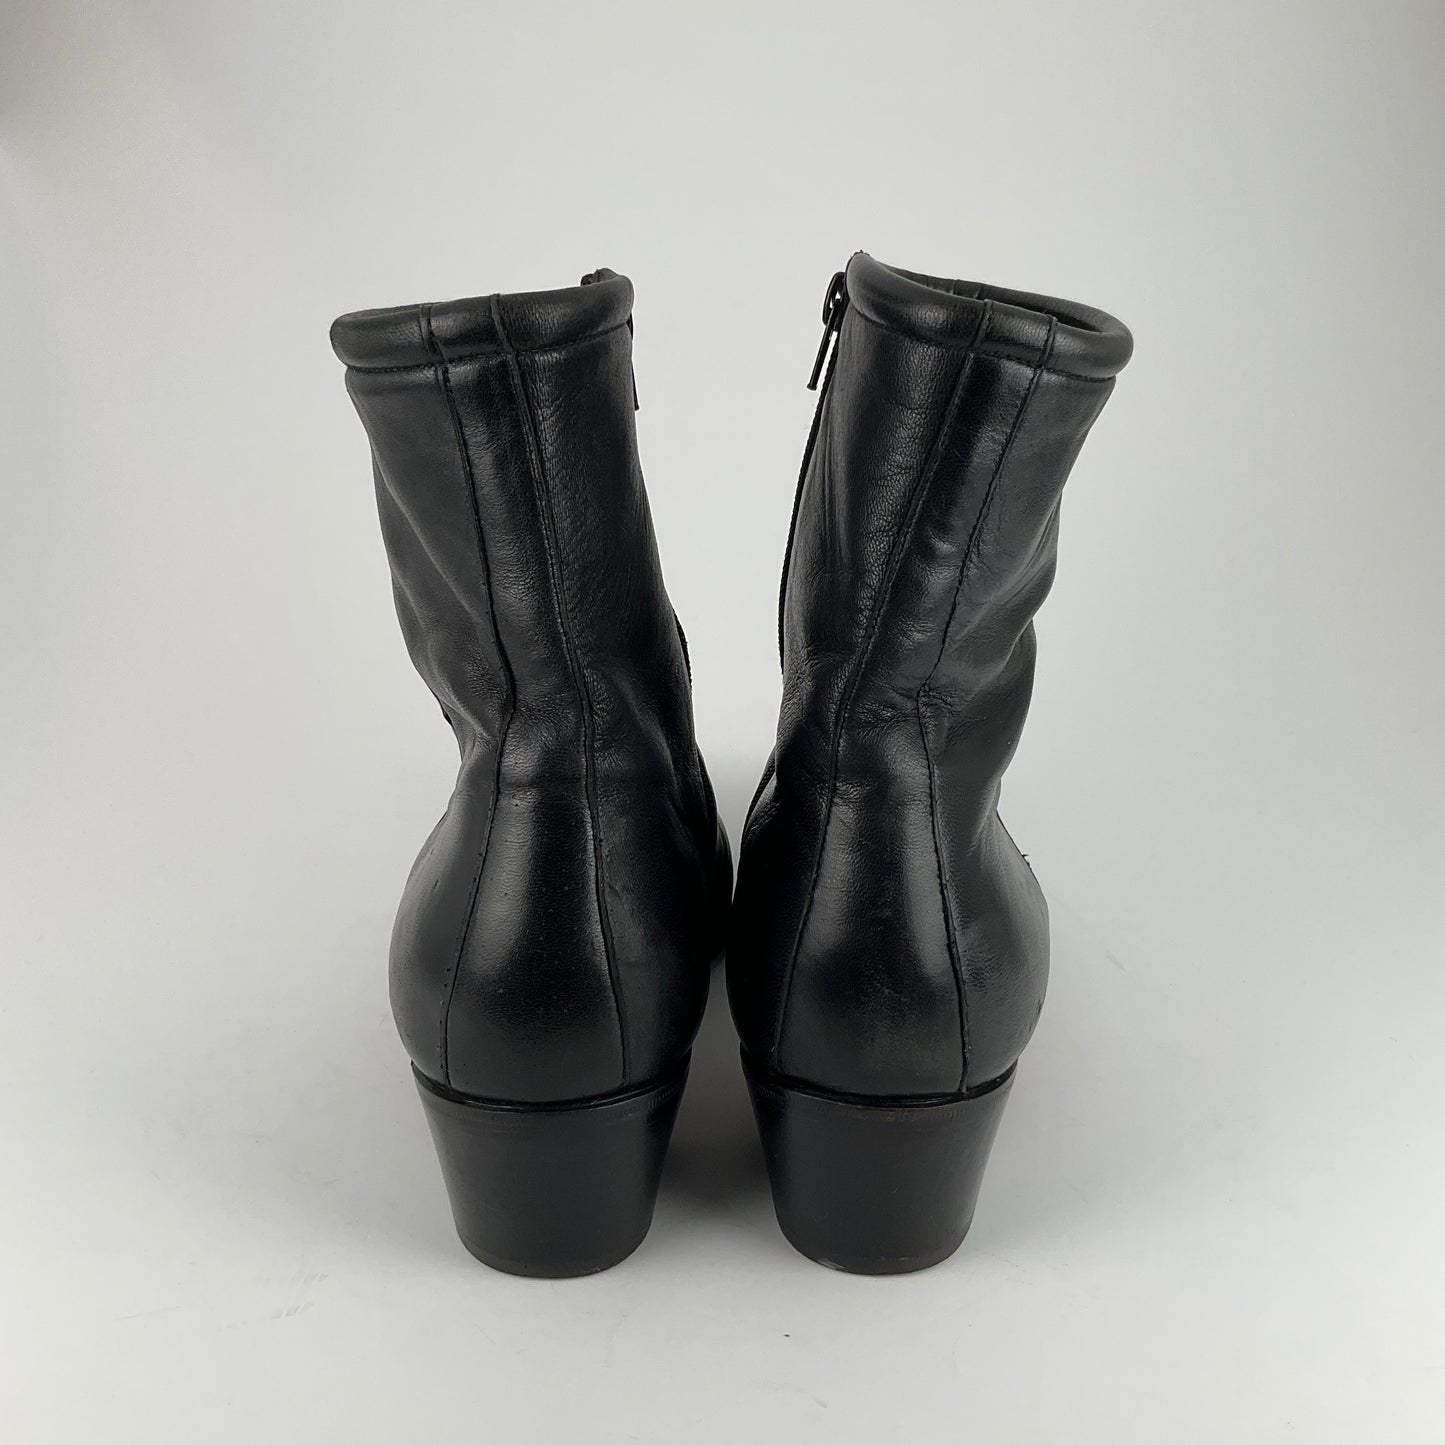 Stamati Mastroianni - Italian Leather Boots - Size 10.5